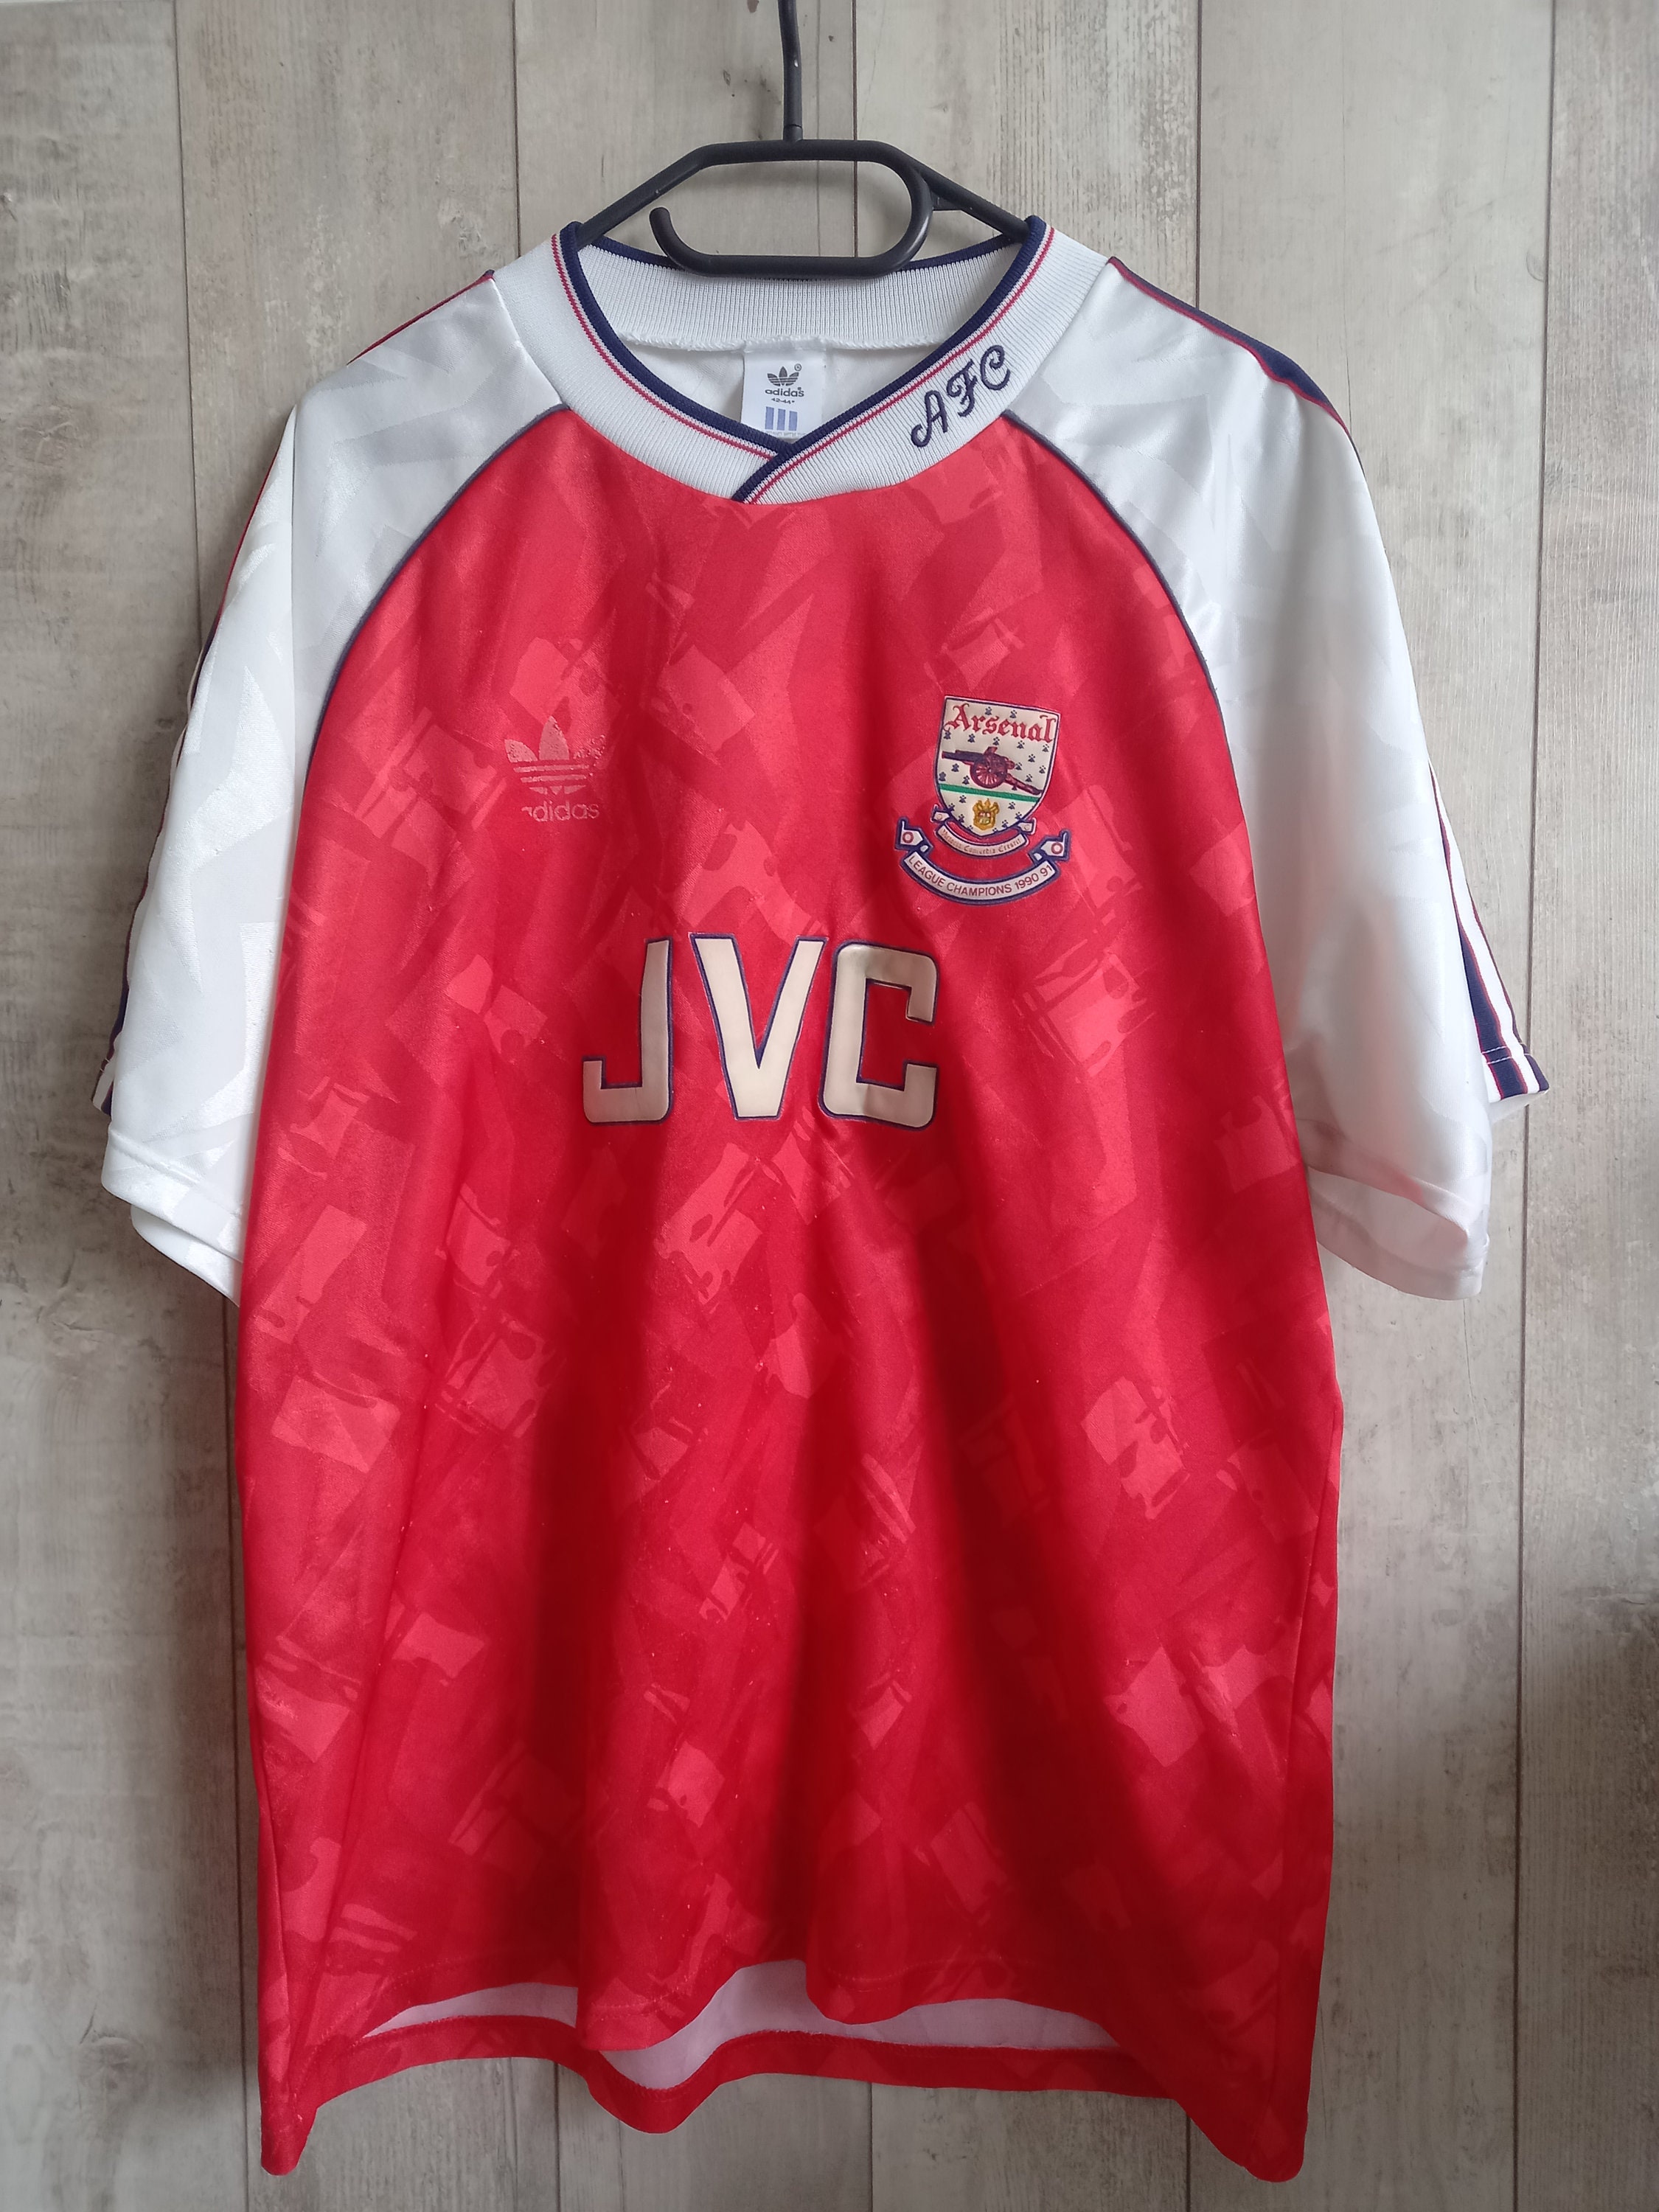 Arsenal Home football shirt 1990 - 1992. Sponsored by JVC